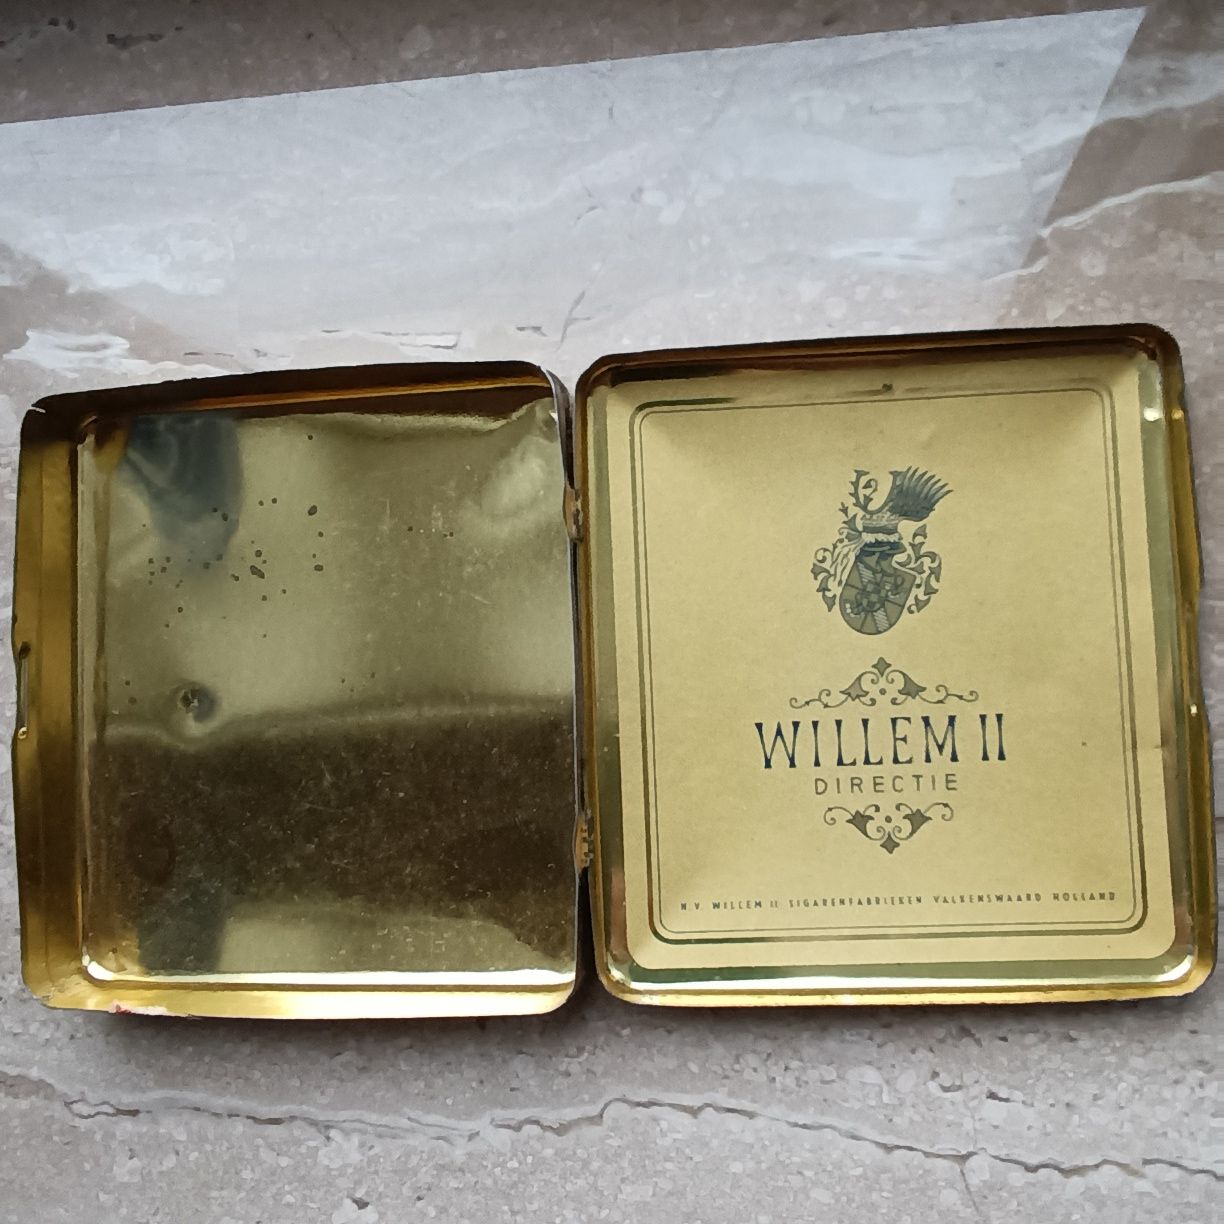 Puszka pudełko na cygara Willem II DirectX Sigaren